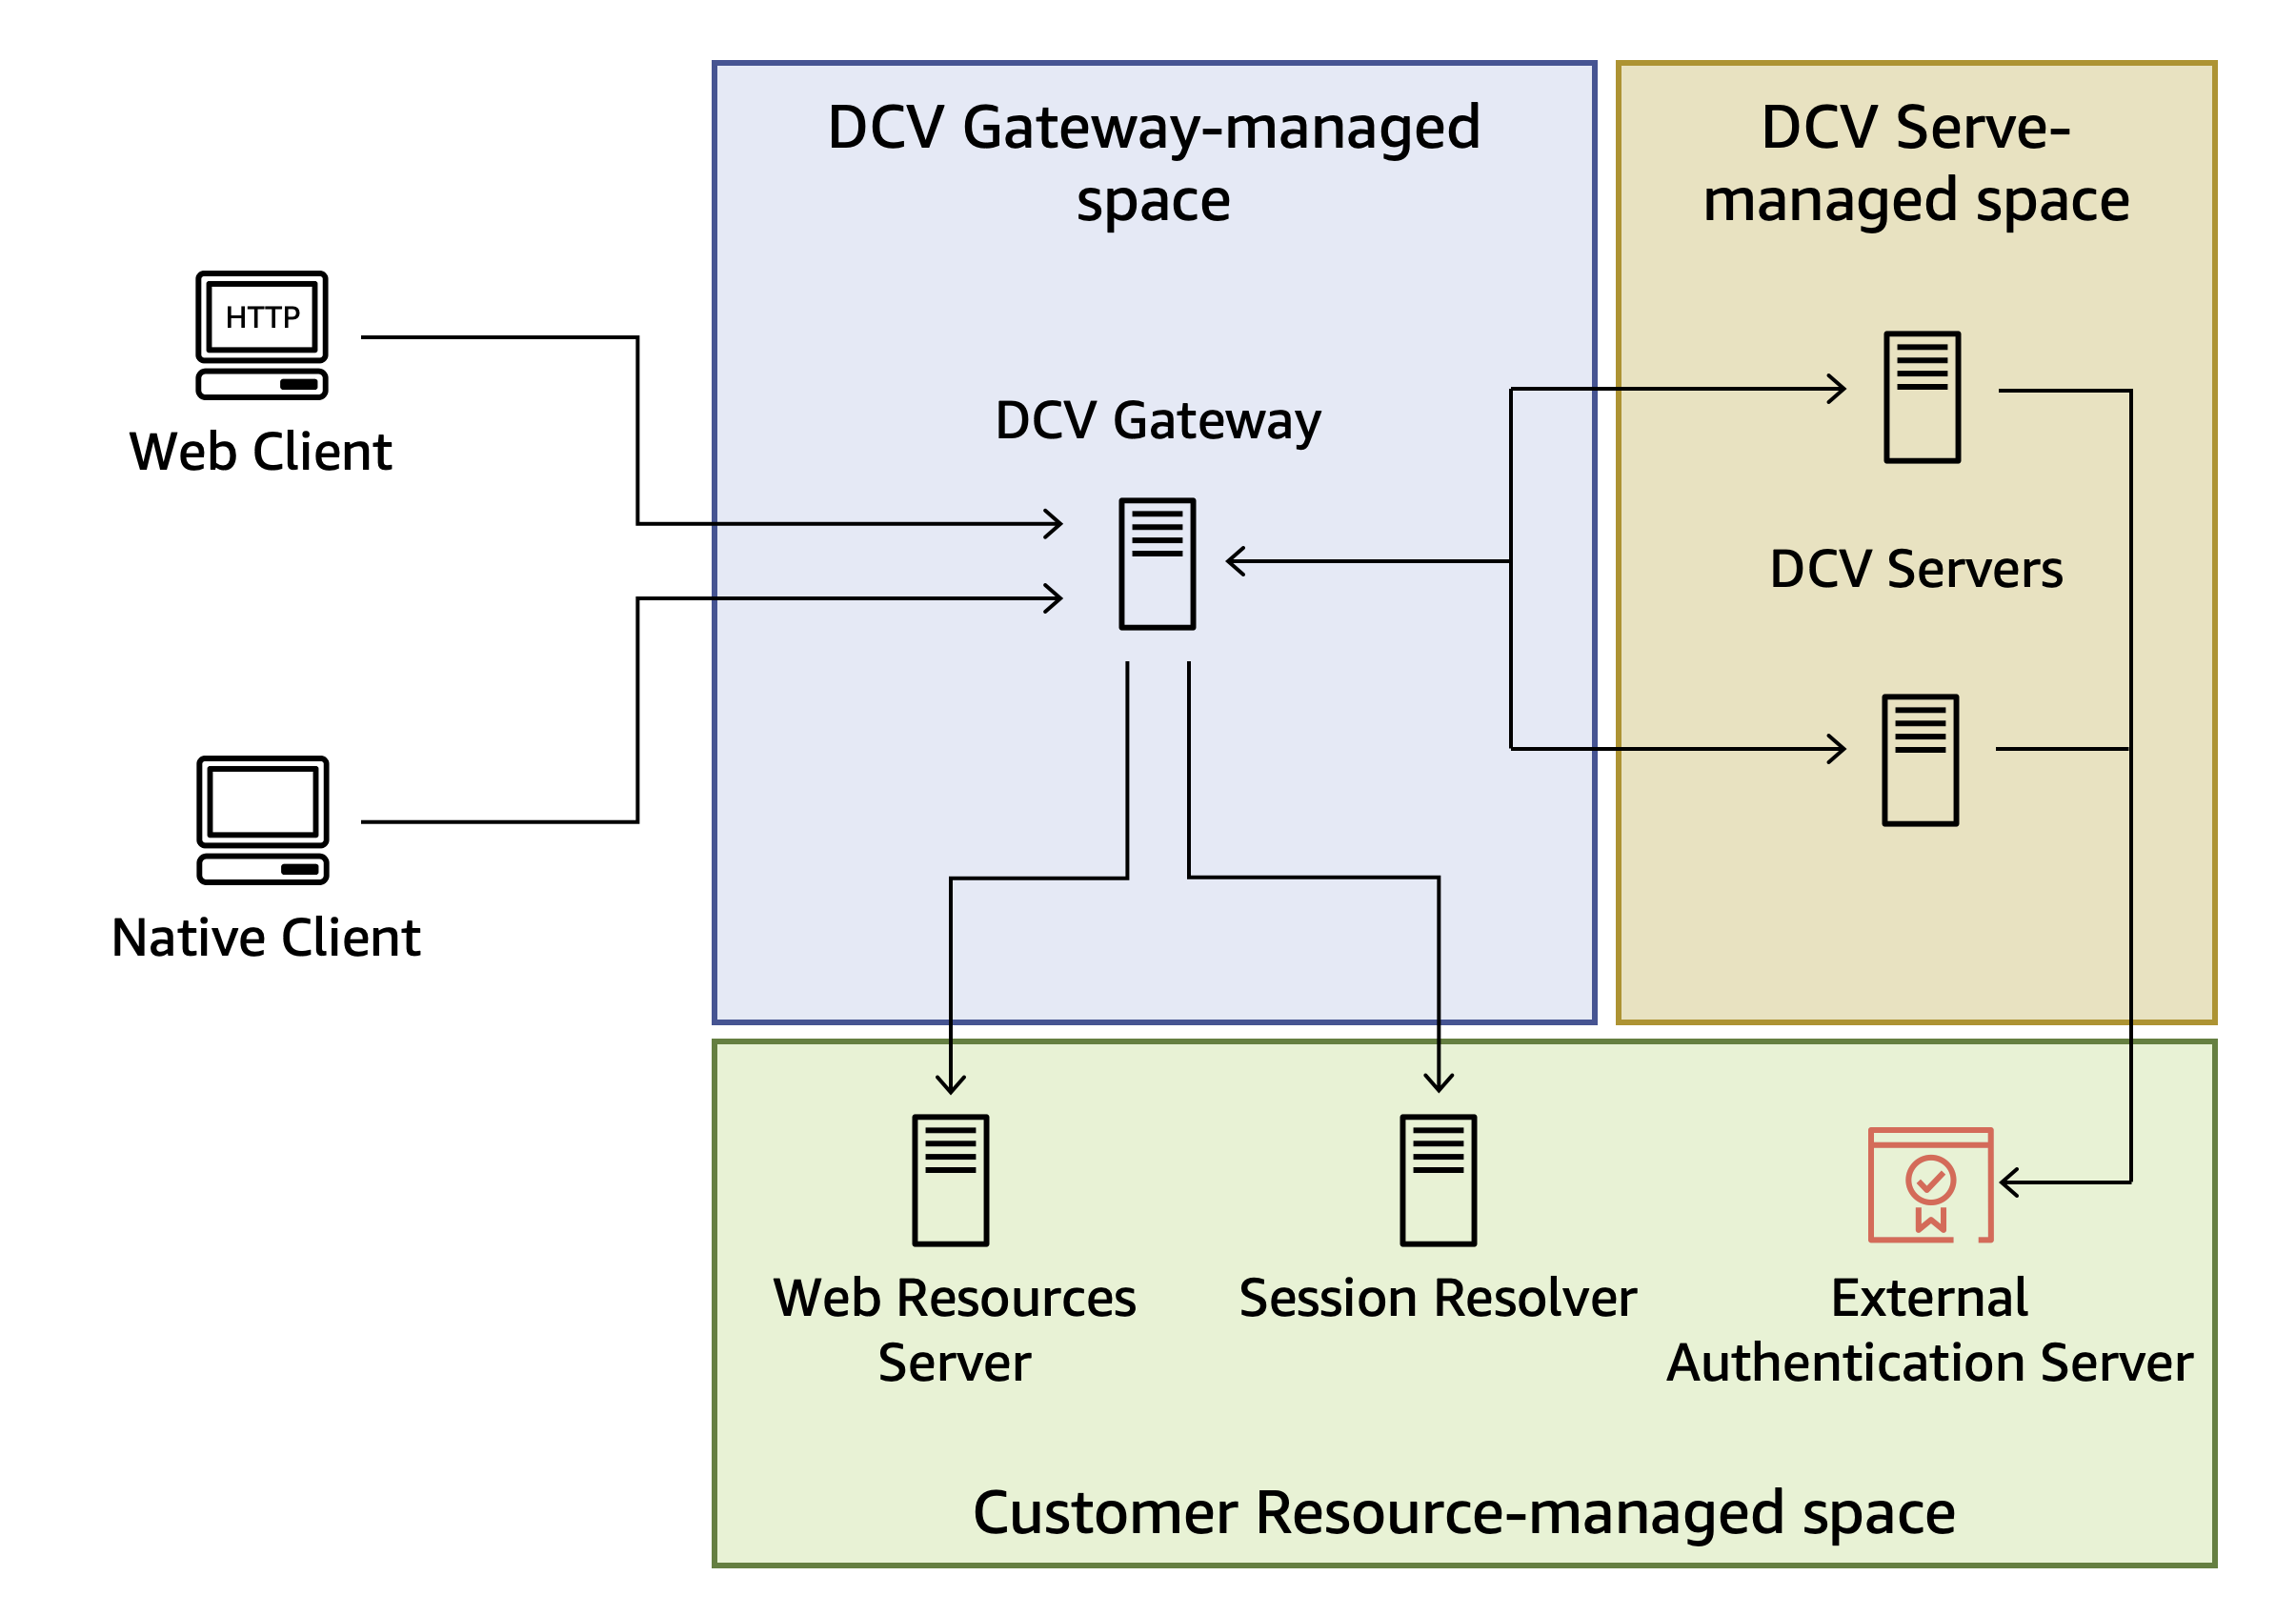 
        NICE DCV Connection Gateway architecture
      